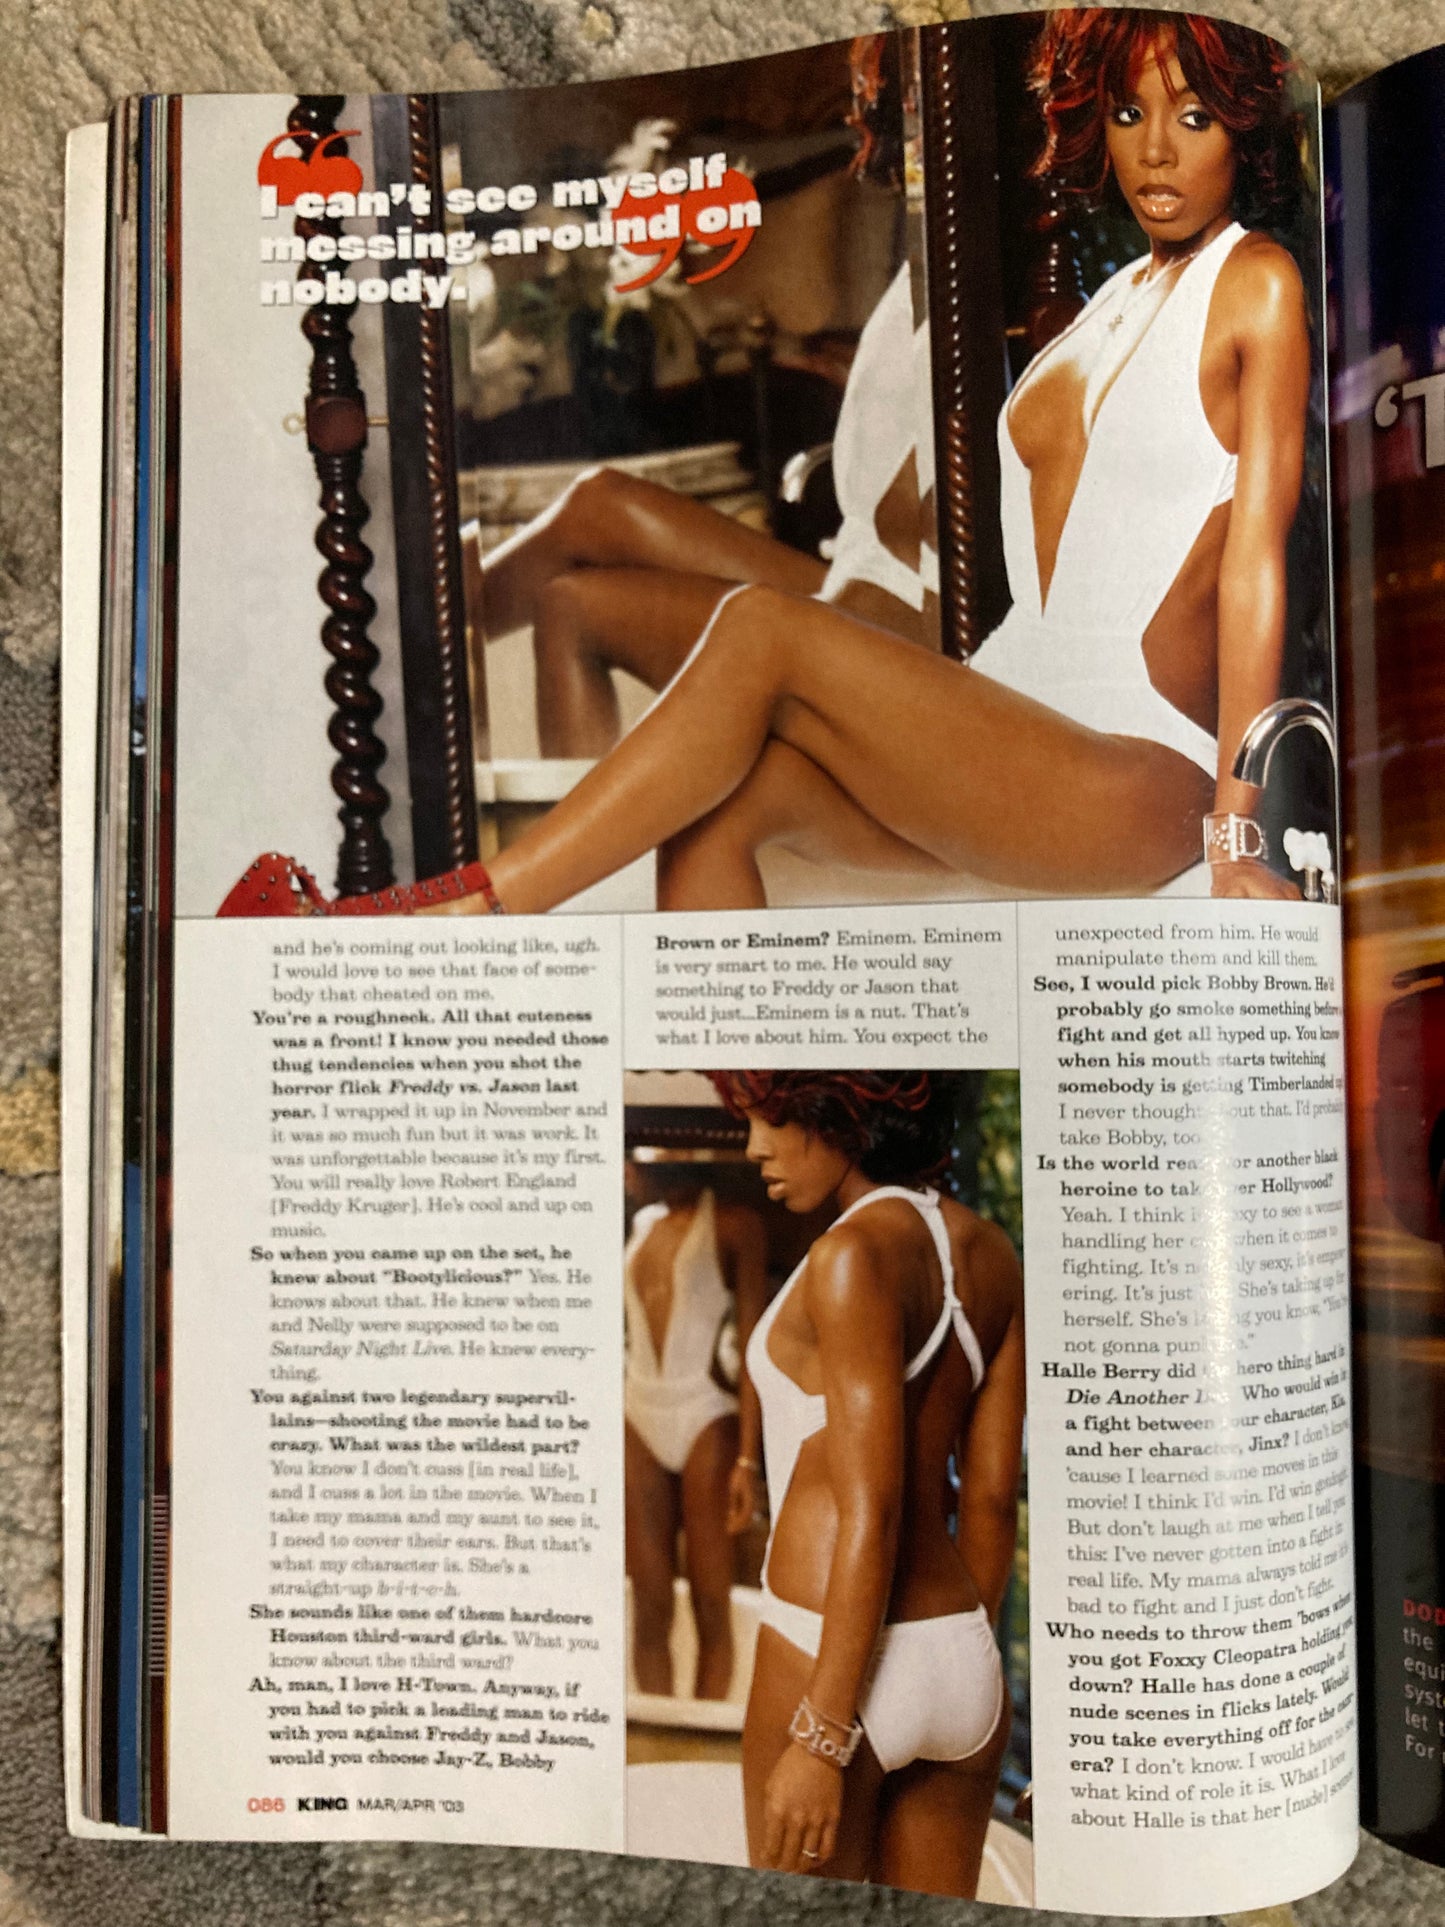 King Magazine March/April 2003 Kelly Rowland